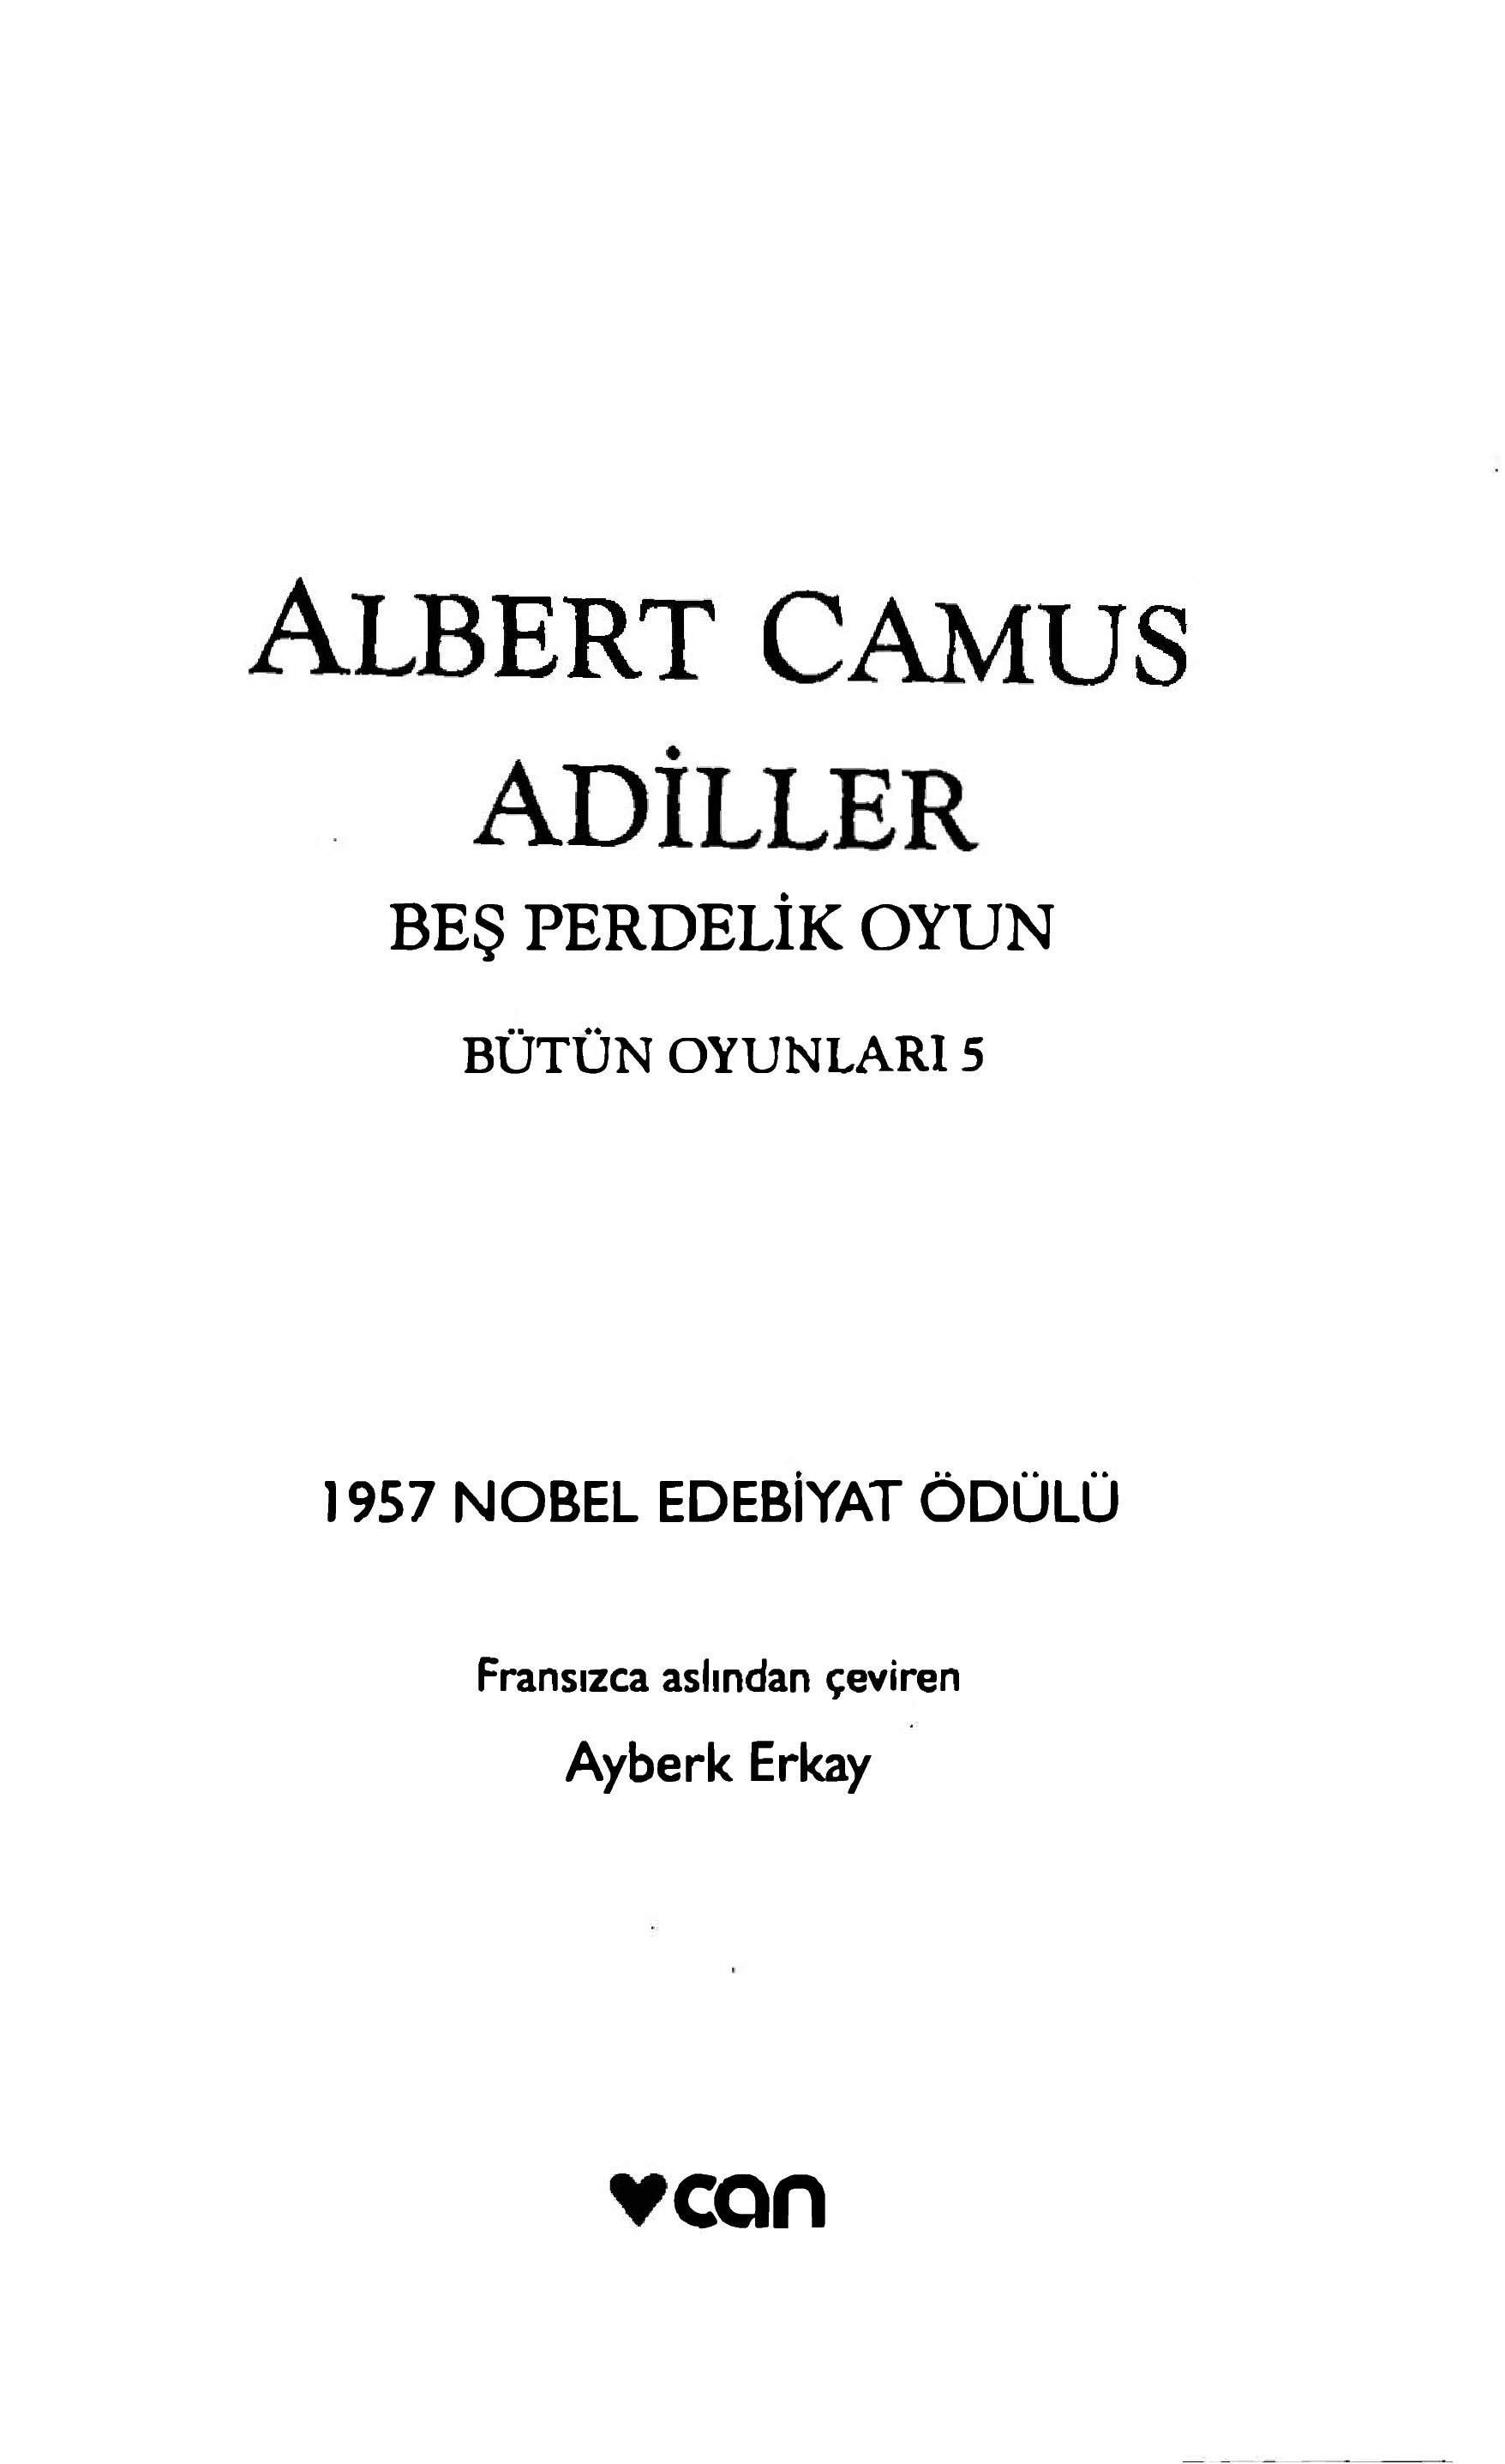 Adiller-Albert Camus-Ayberk Erkay-1990-80s